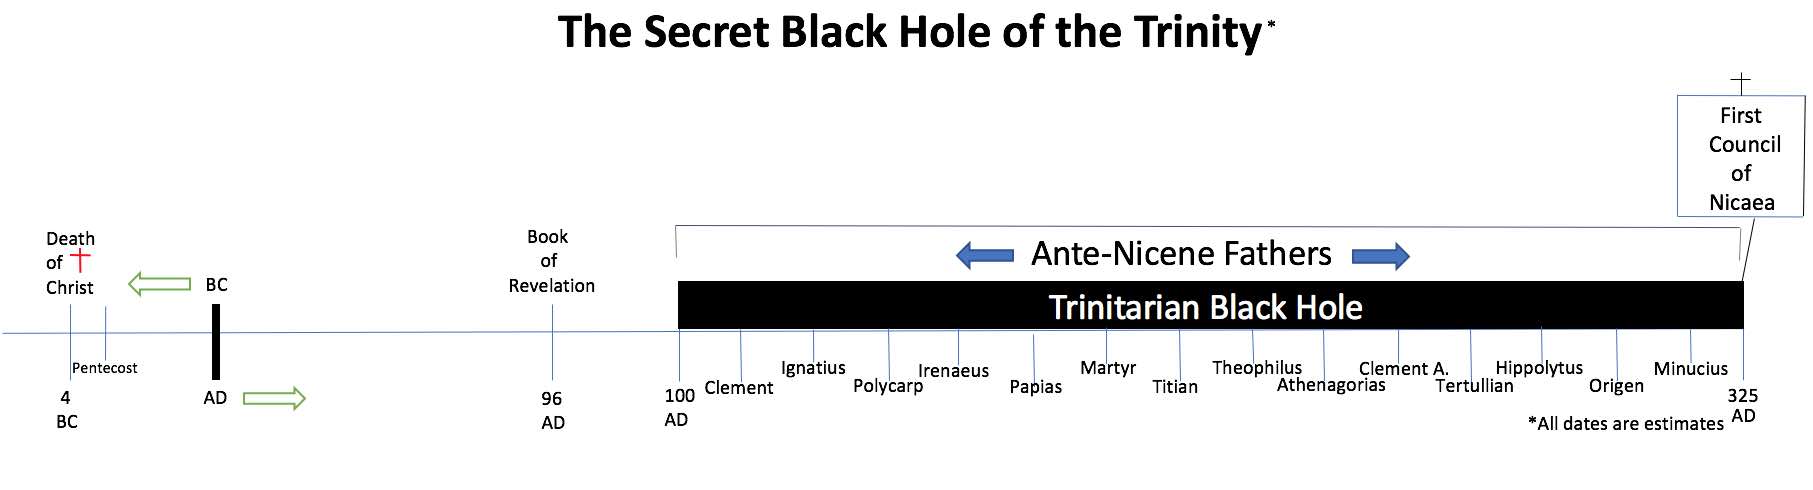 https://www.trinityexamined.com/wp-content/uploads/2017/10/trinity-1.jpg